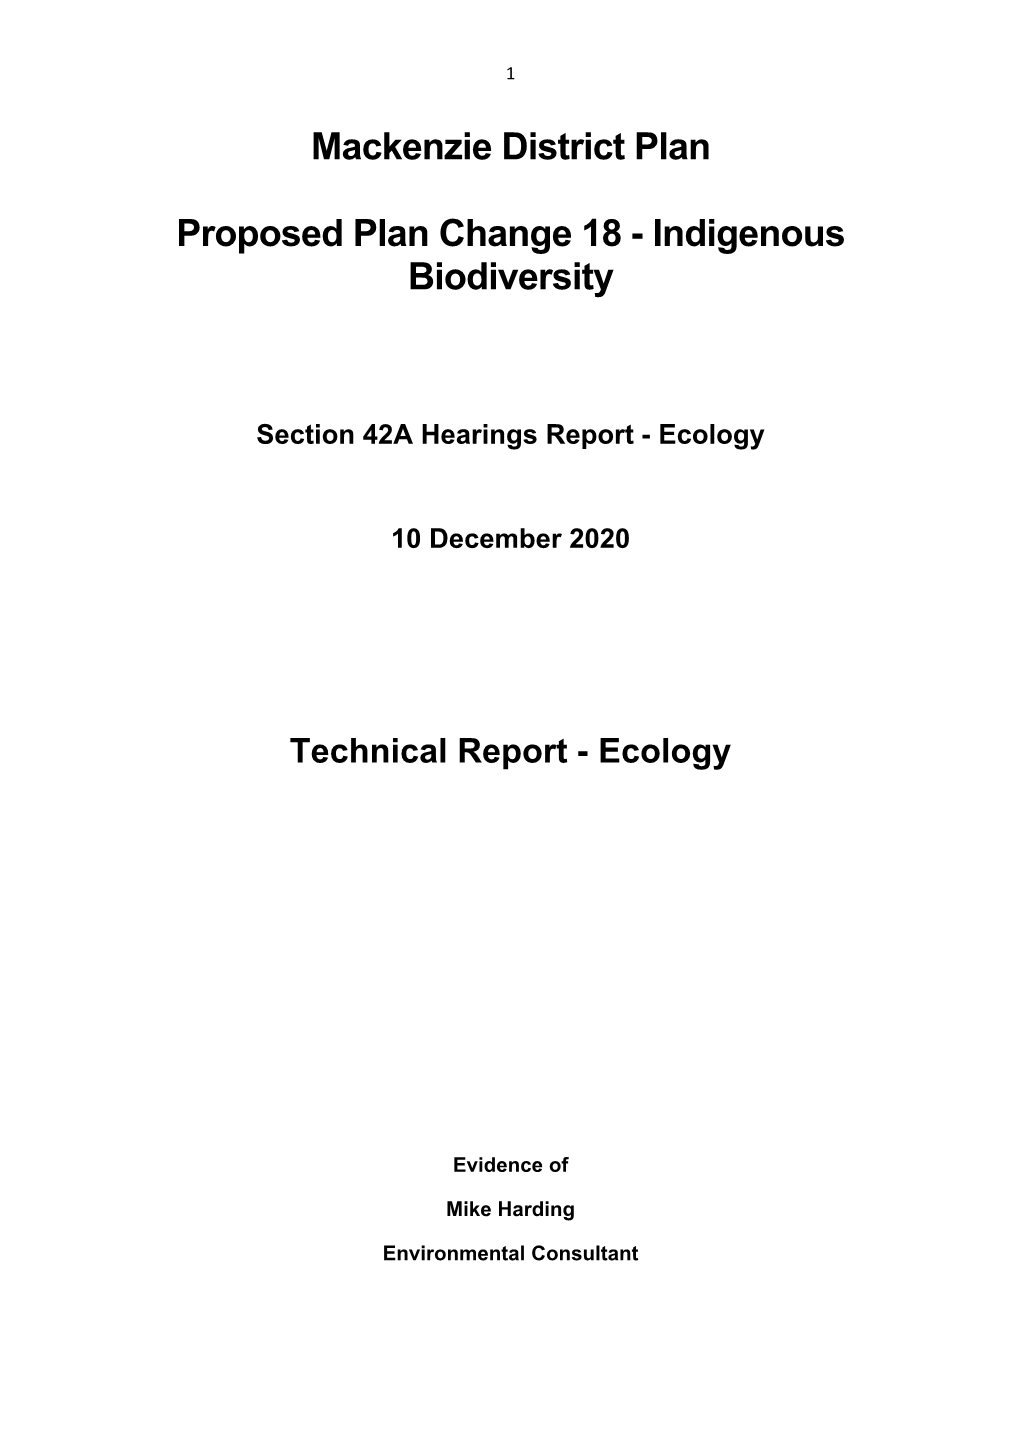 Mackenzie District Plan Proposed Plan Change 18